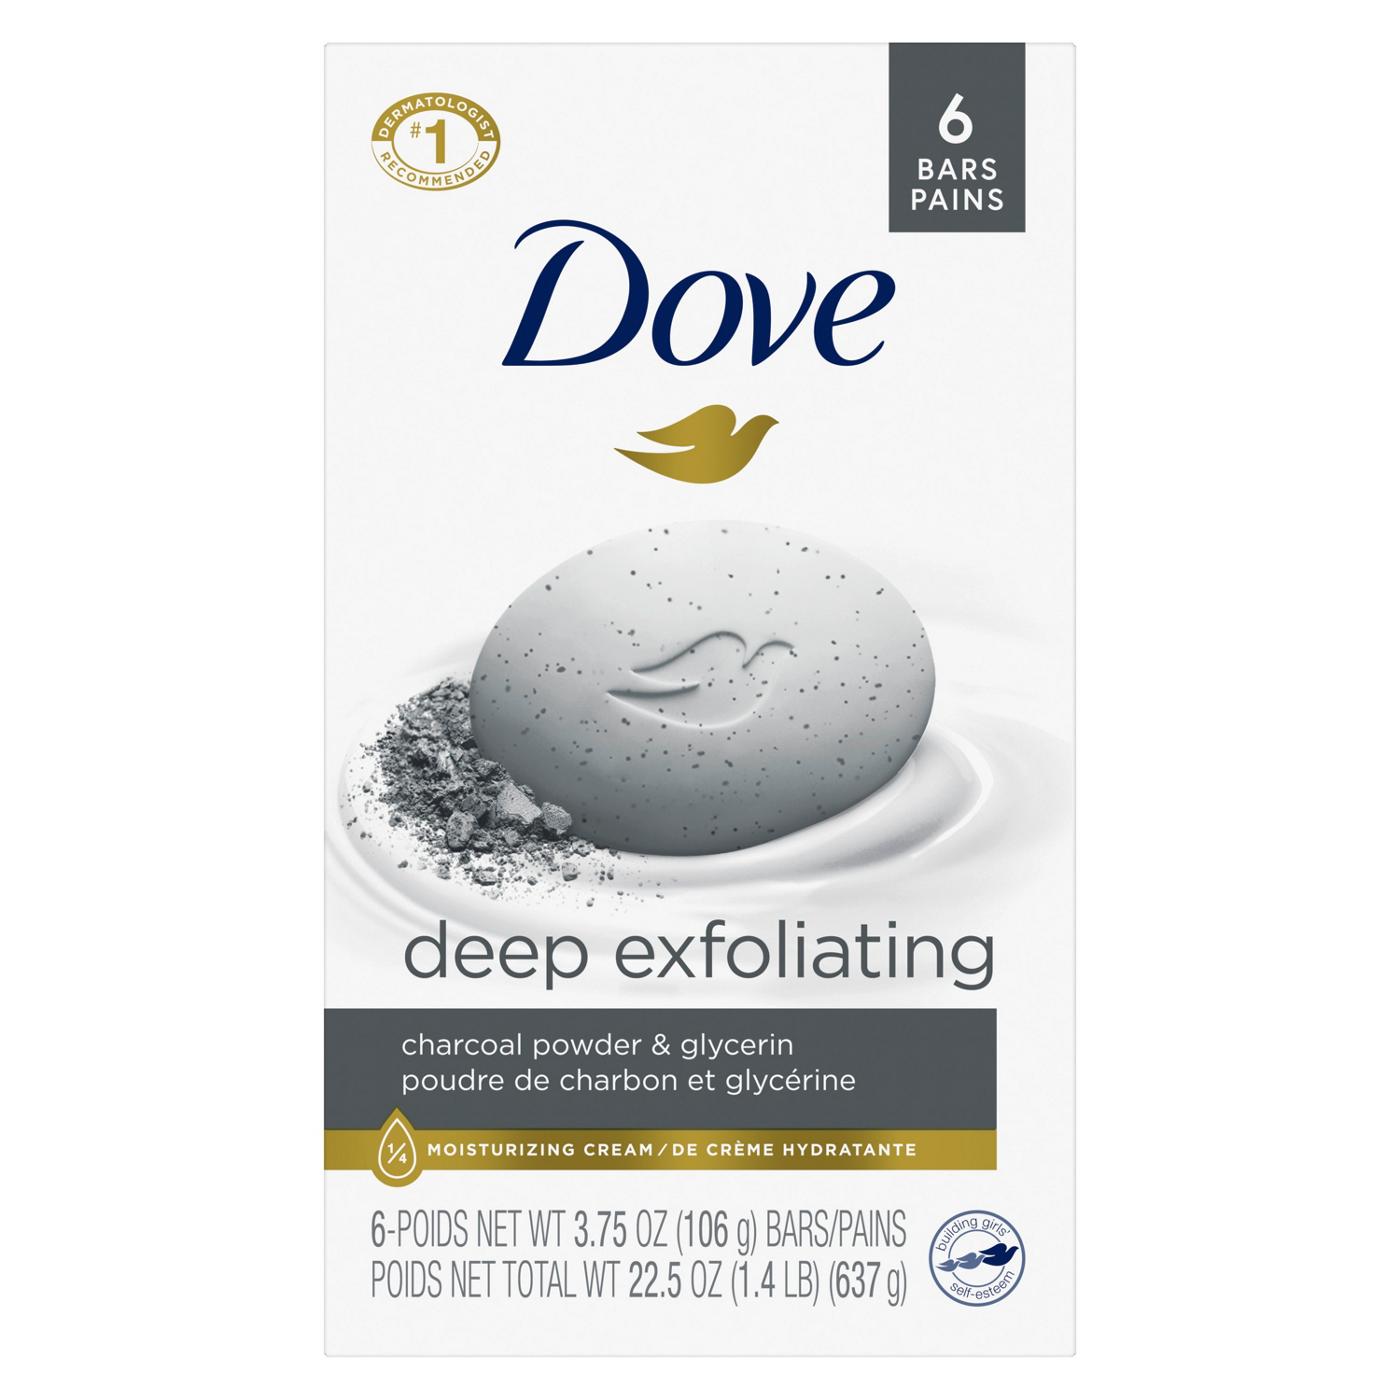 Dove Deep Exfoliating Bar Soap - Charcoal powder & glycerin; image 1 of 4